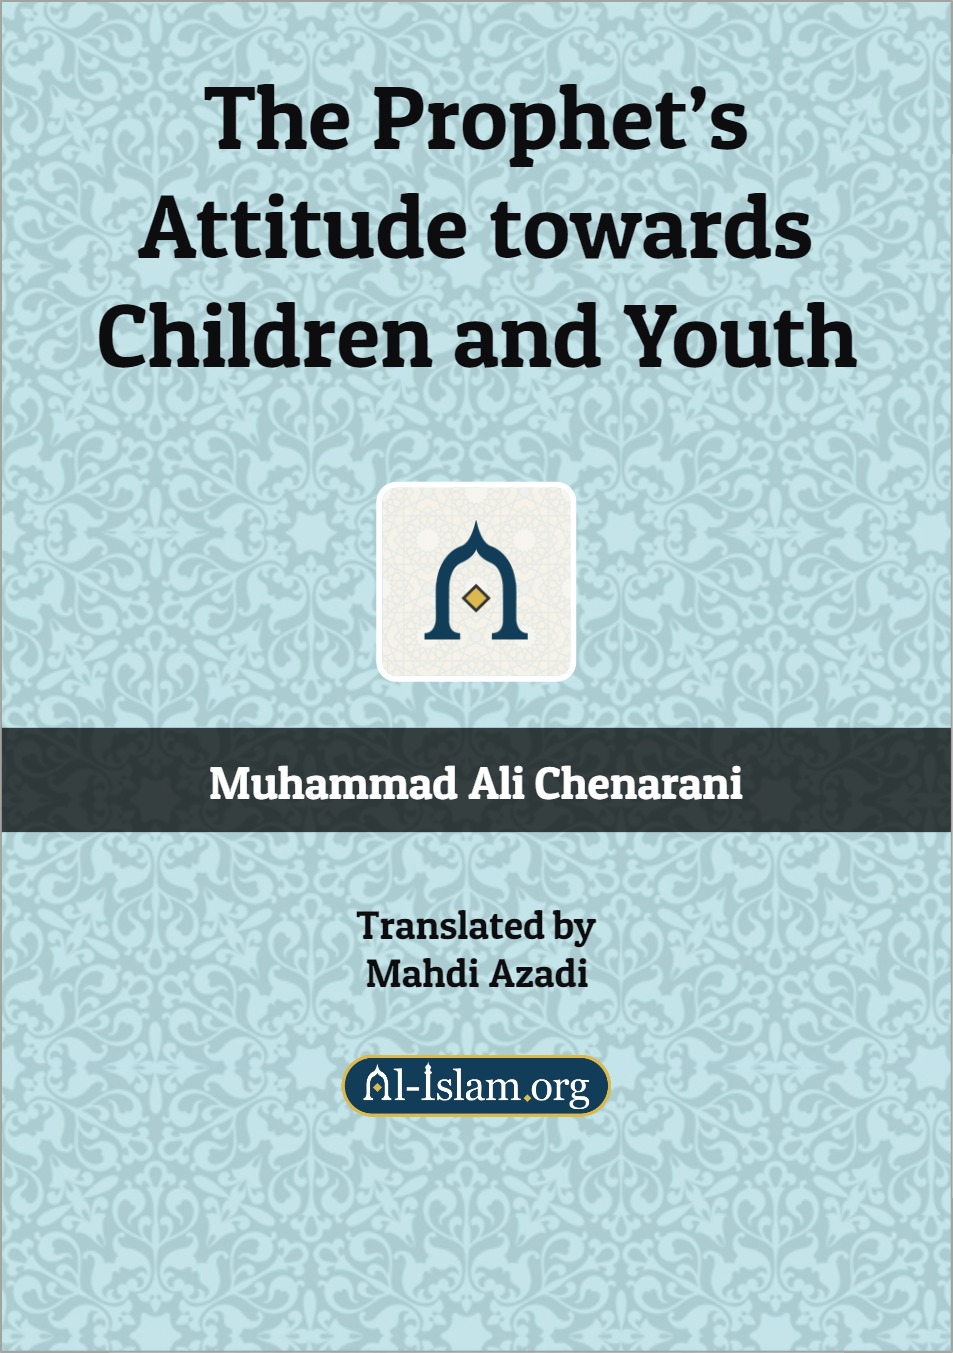 The Prophet’s Attitude towards Children